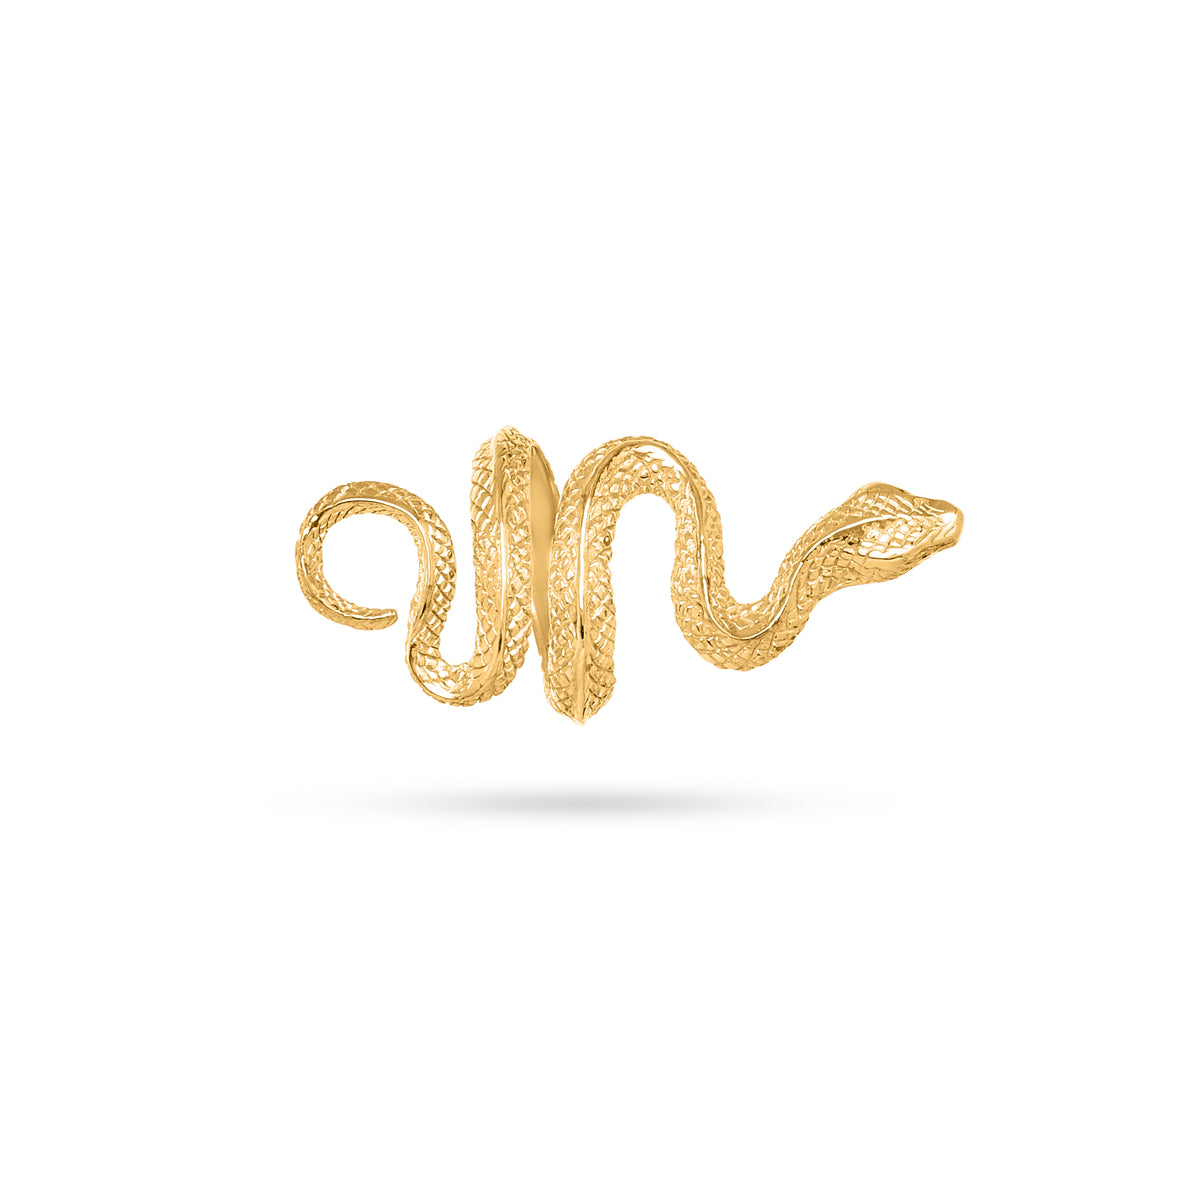 VIKA jewels Schlange Snake ring recycled sterling silver silber gold plated 24 carat vergoldet handmade handgemacht bali